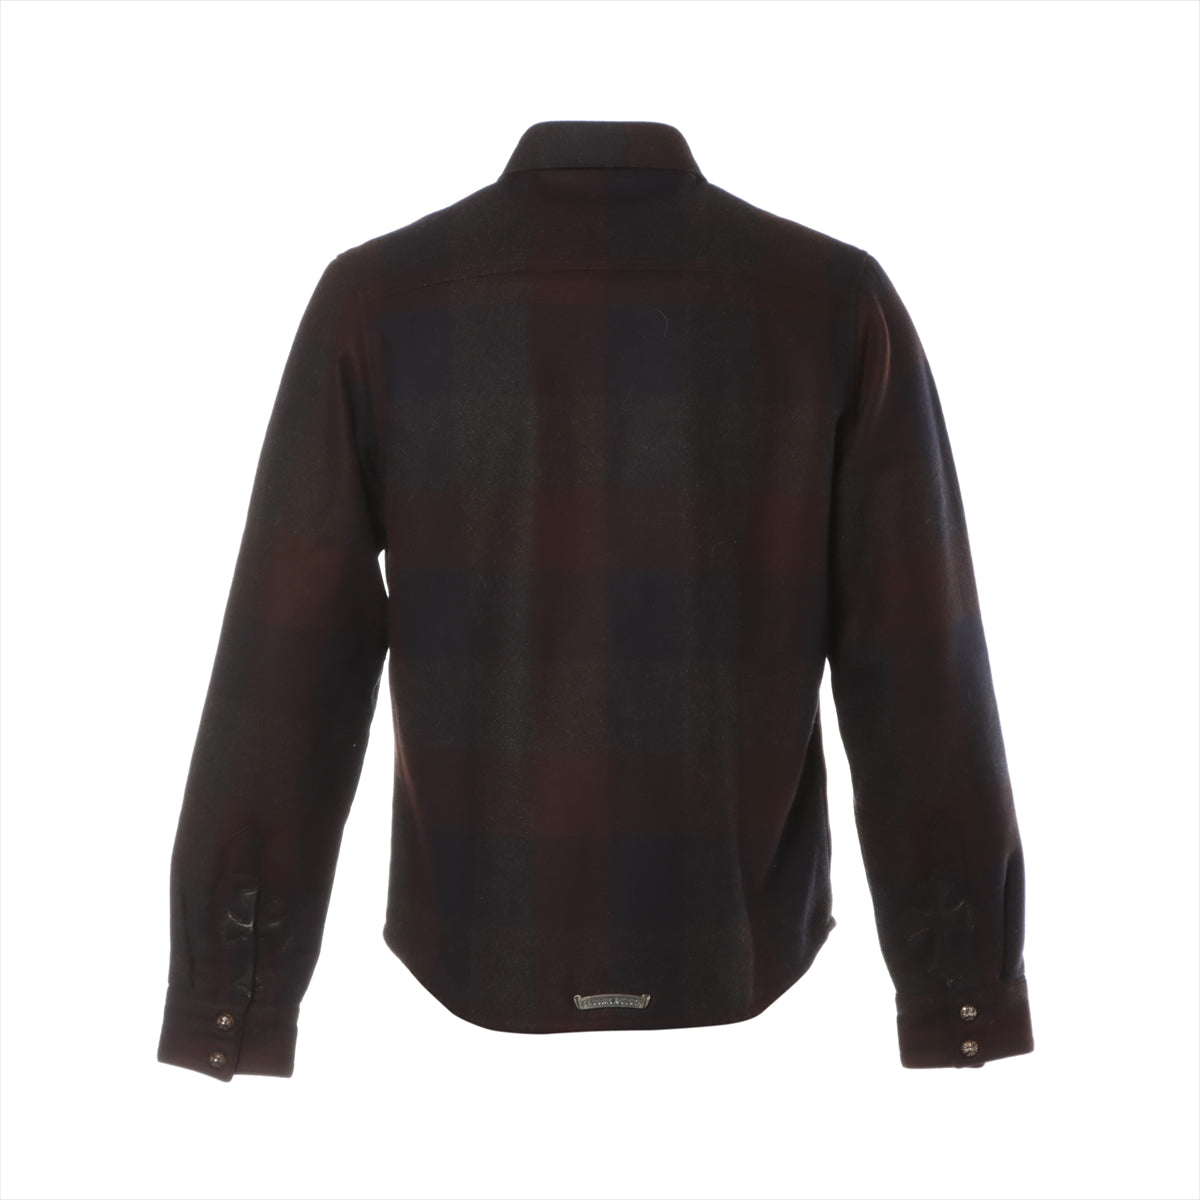 Chrome Hearts Cross ball Jacket Wool & Nylon size S Black x navy x brown JVP shirt jacket Quilted lining batting